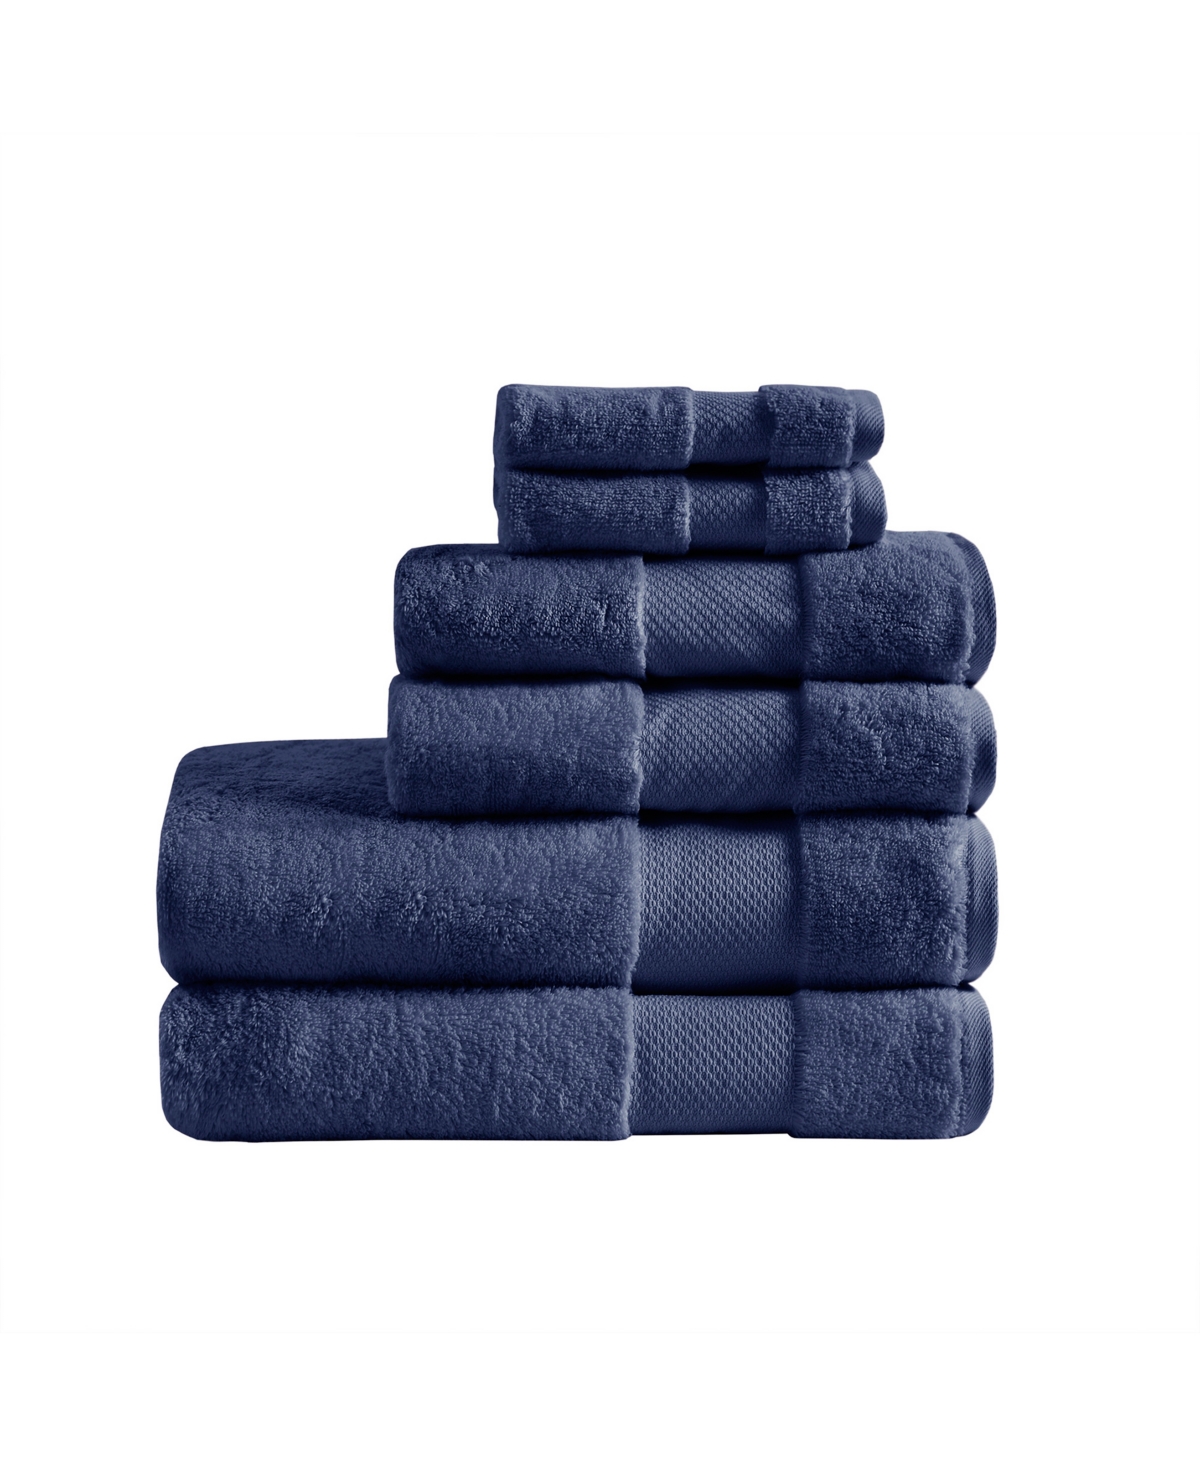 Madison Park Turkish Cotton 6-pc. Bath Towel Set Bedding In Navy